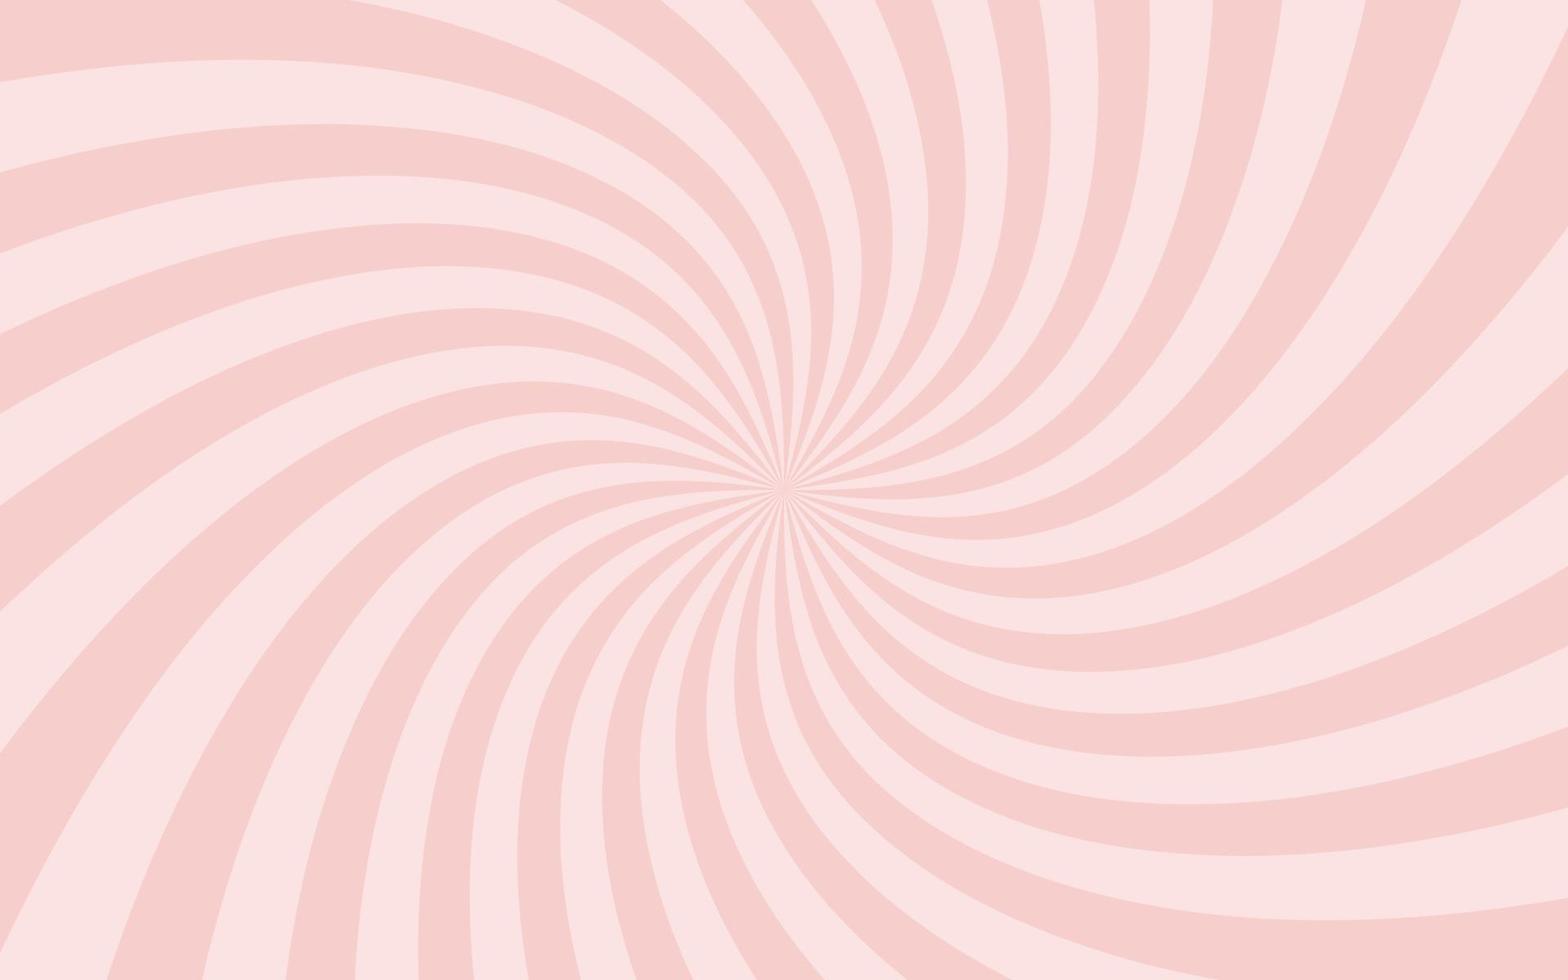 Sun rays retro vintage style on pink background, Sunburst pattern background. Rays. Summer banner vector illustration. Abstract sunburst wallpaper for template business social media advertising.